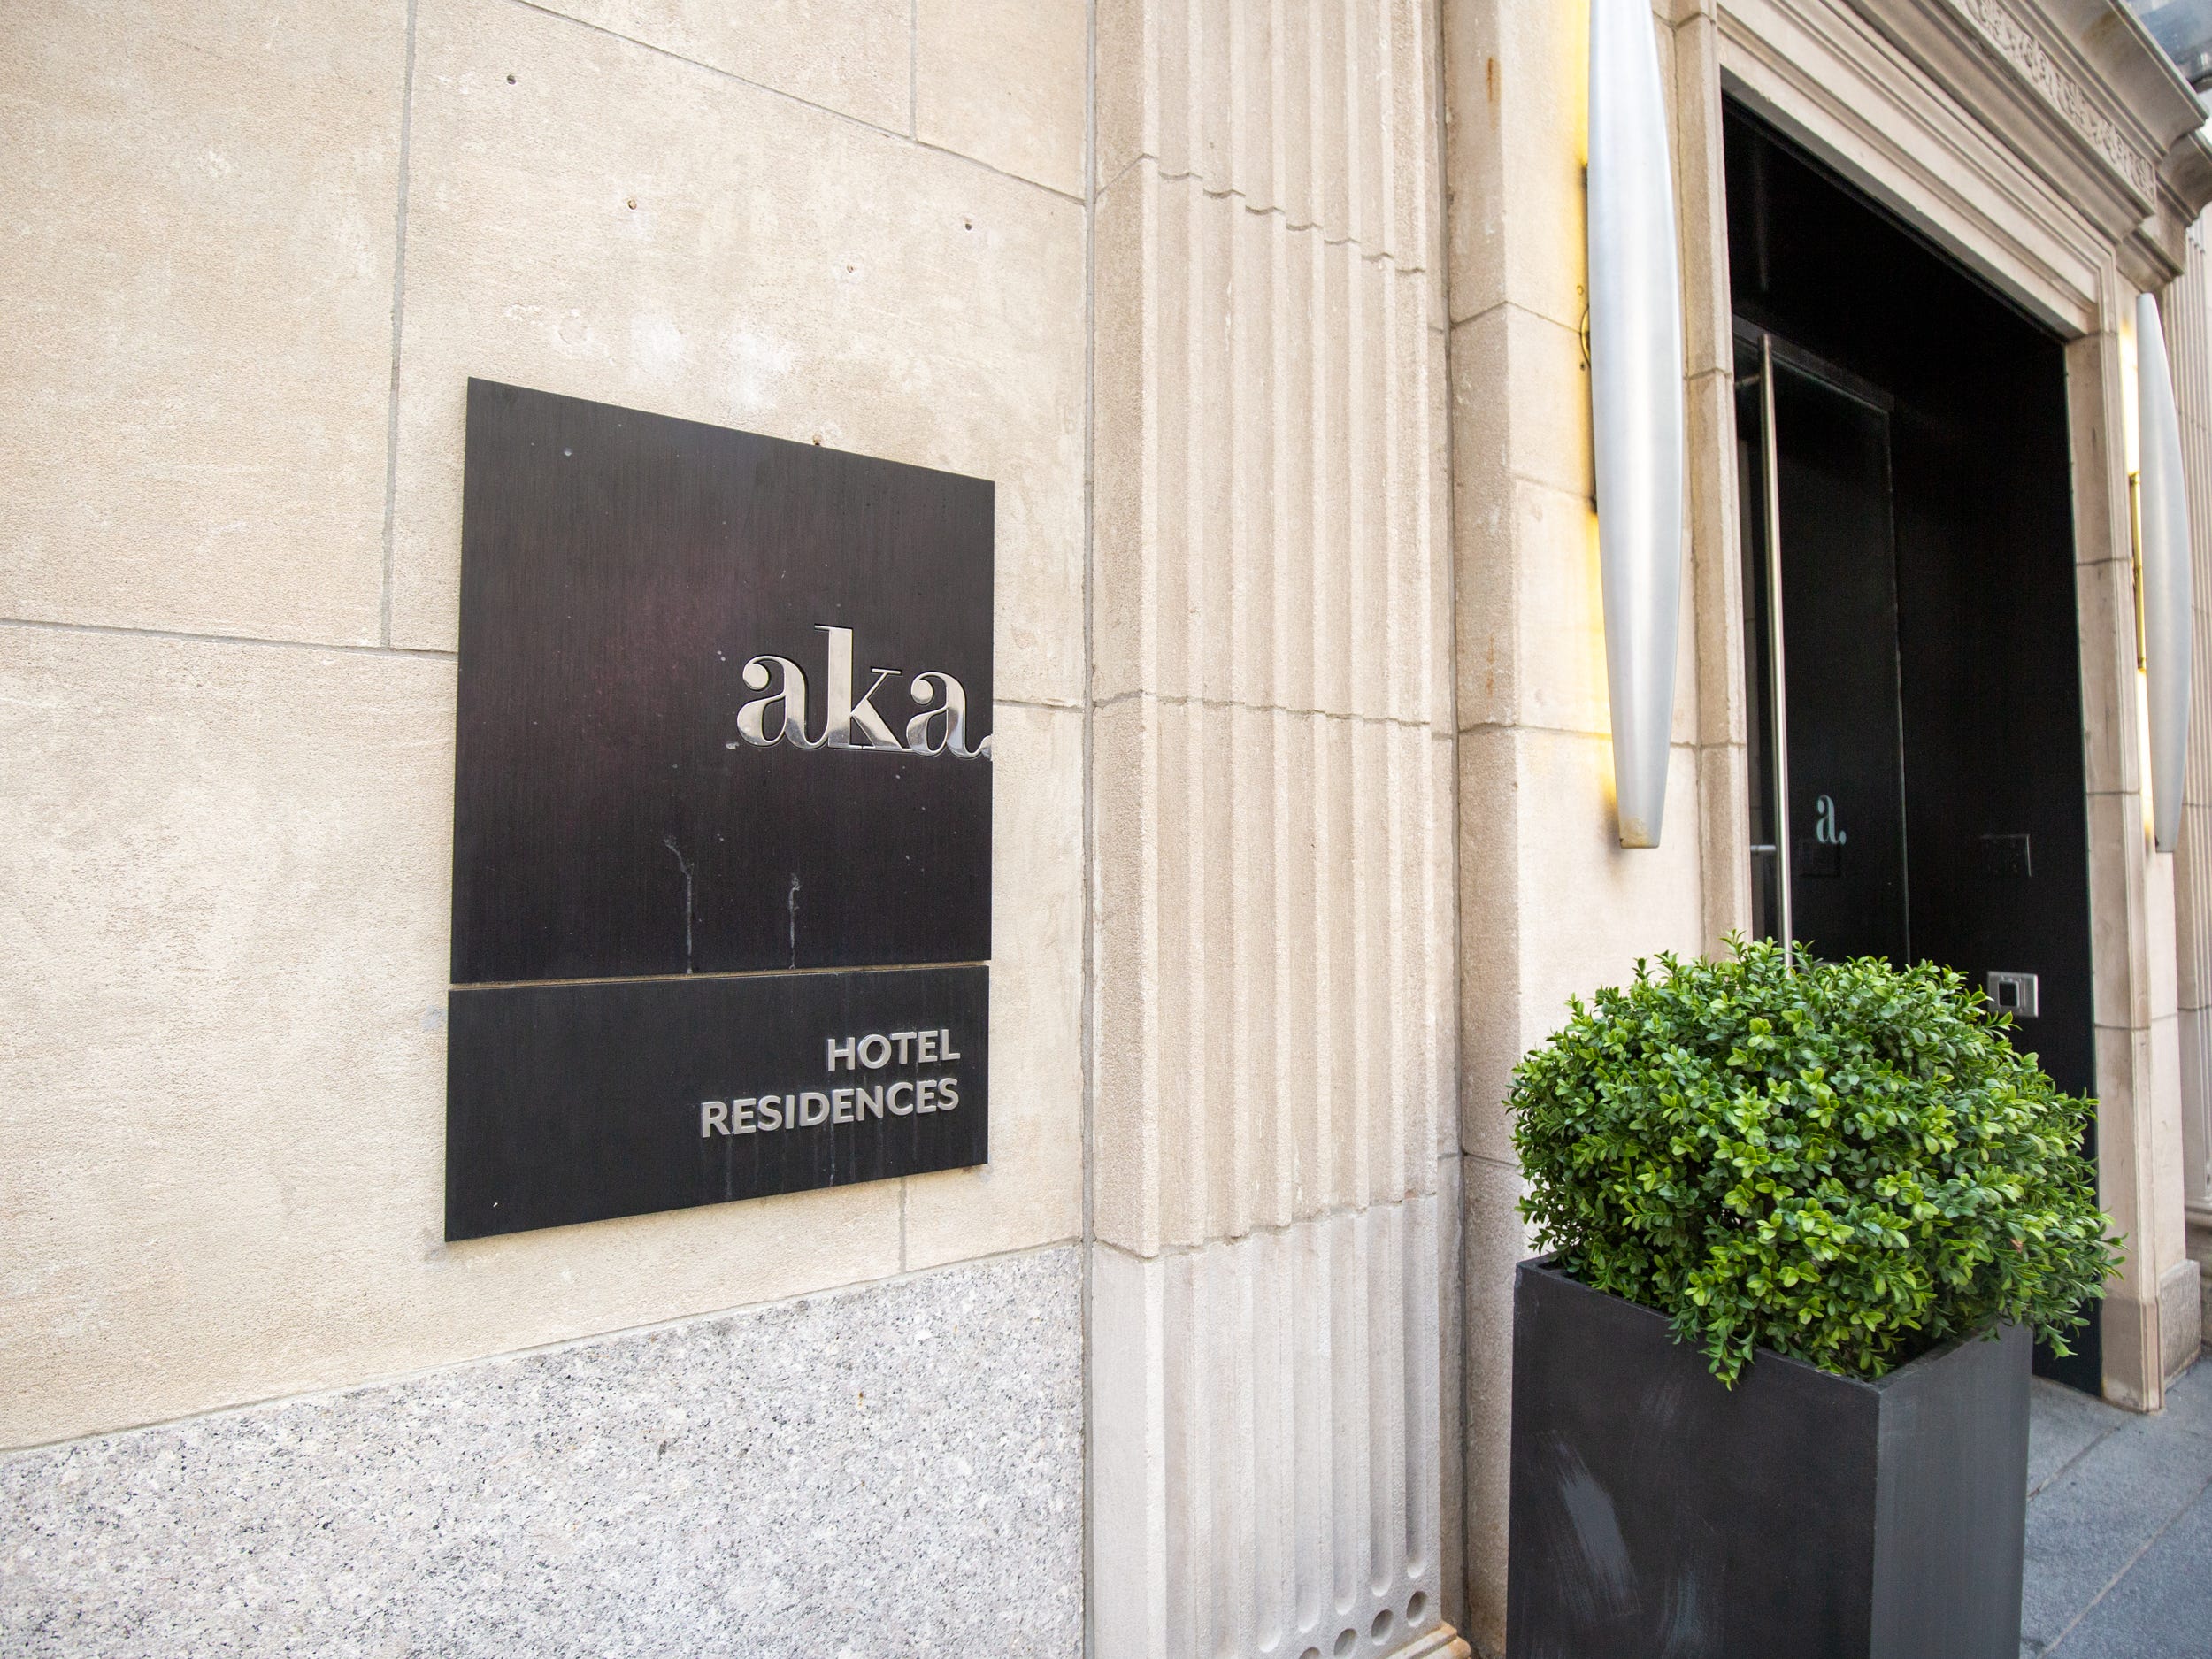 A metal plate denoting the AKA Hotel Residences building.